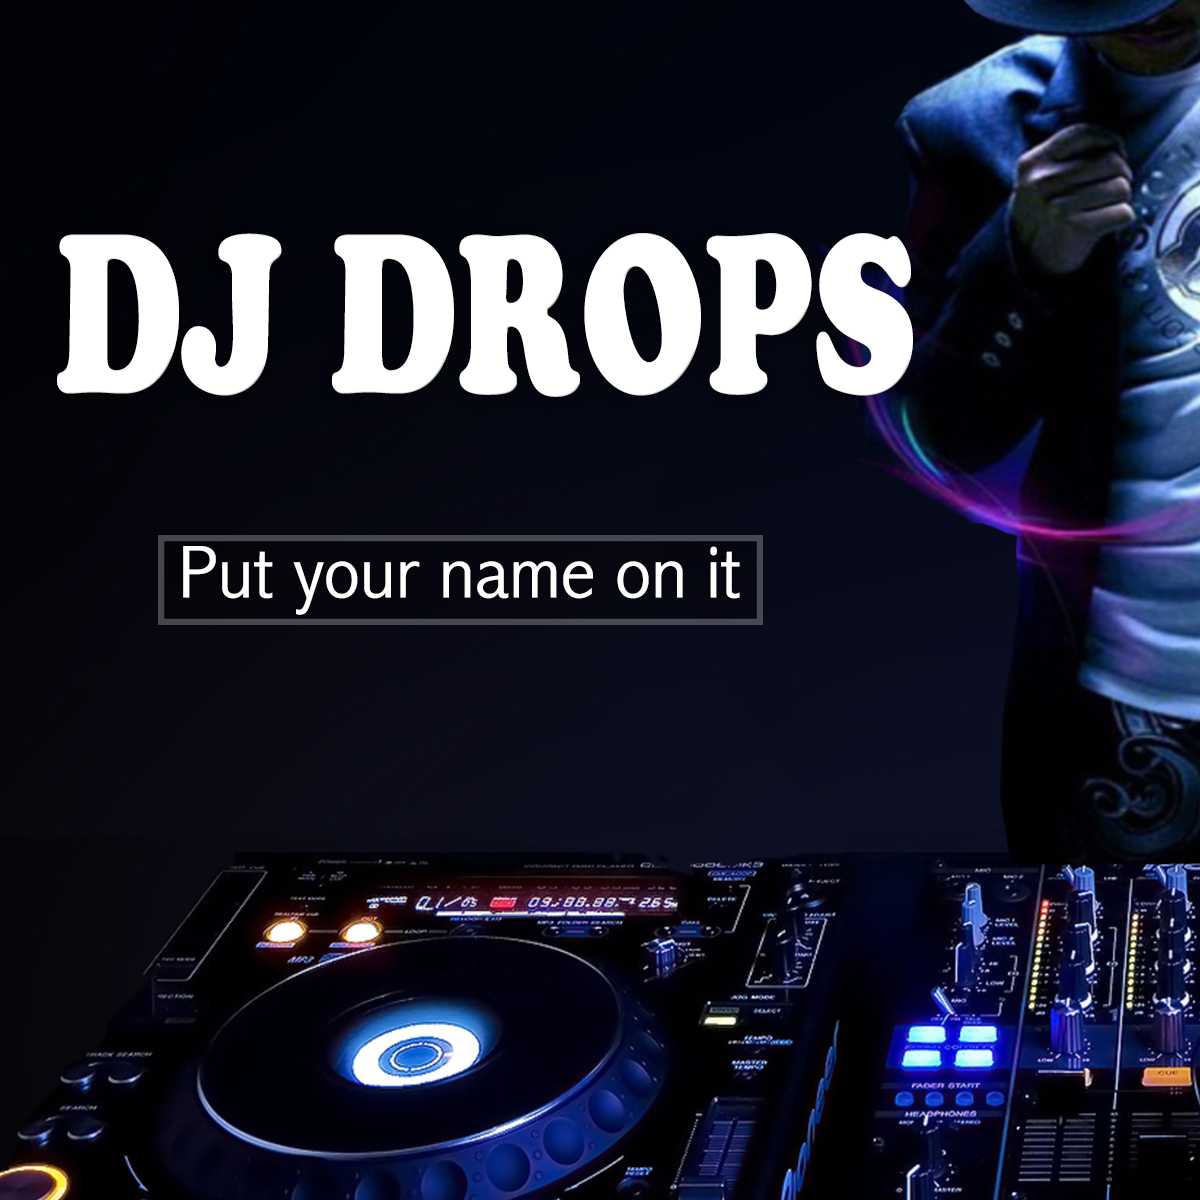 What is a dj drop